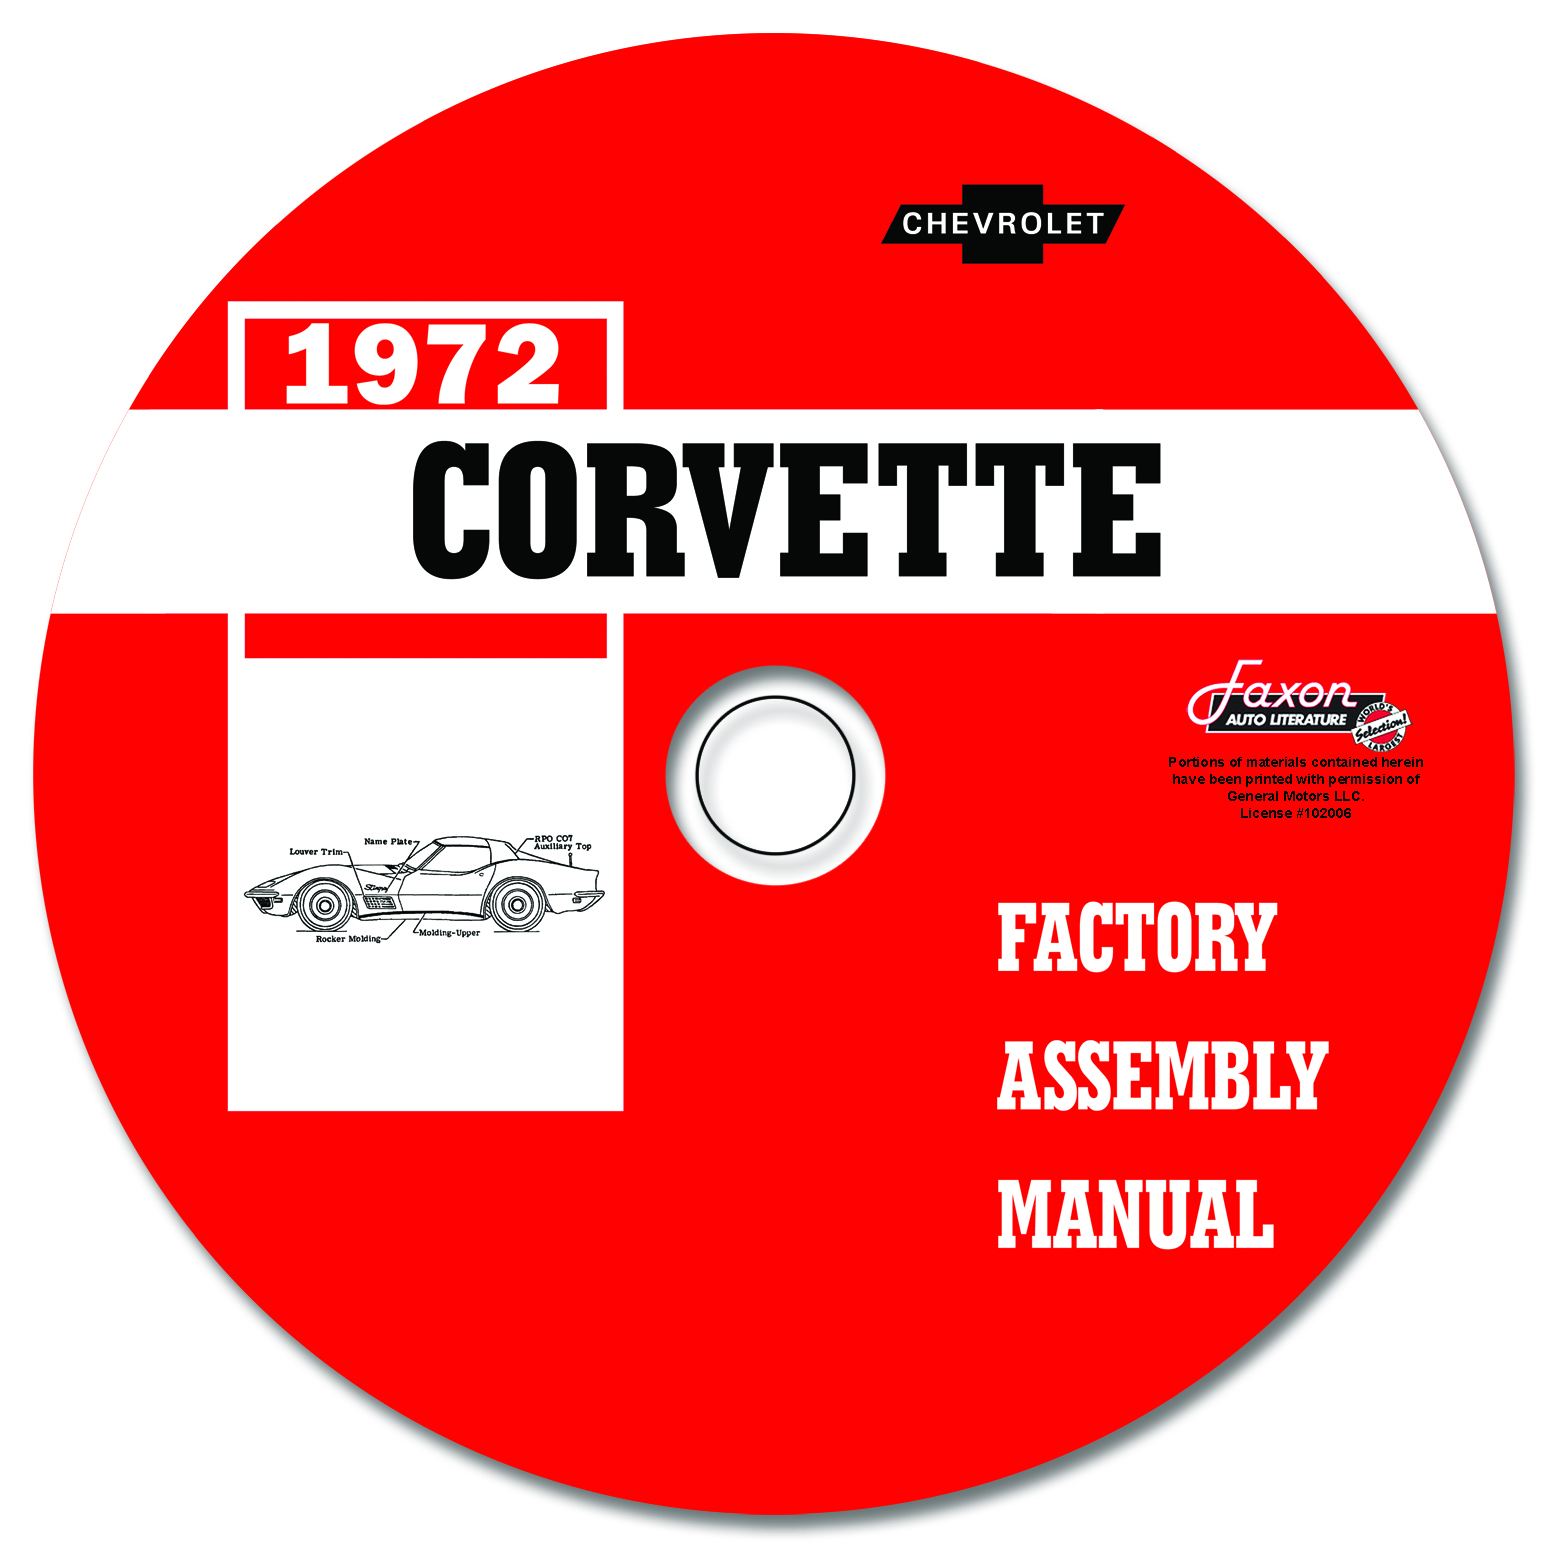 1972 Corvette Factory Assembly Manual CD-ROM